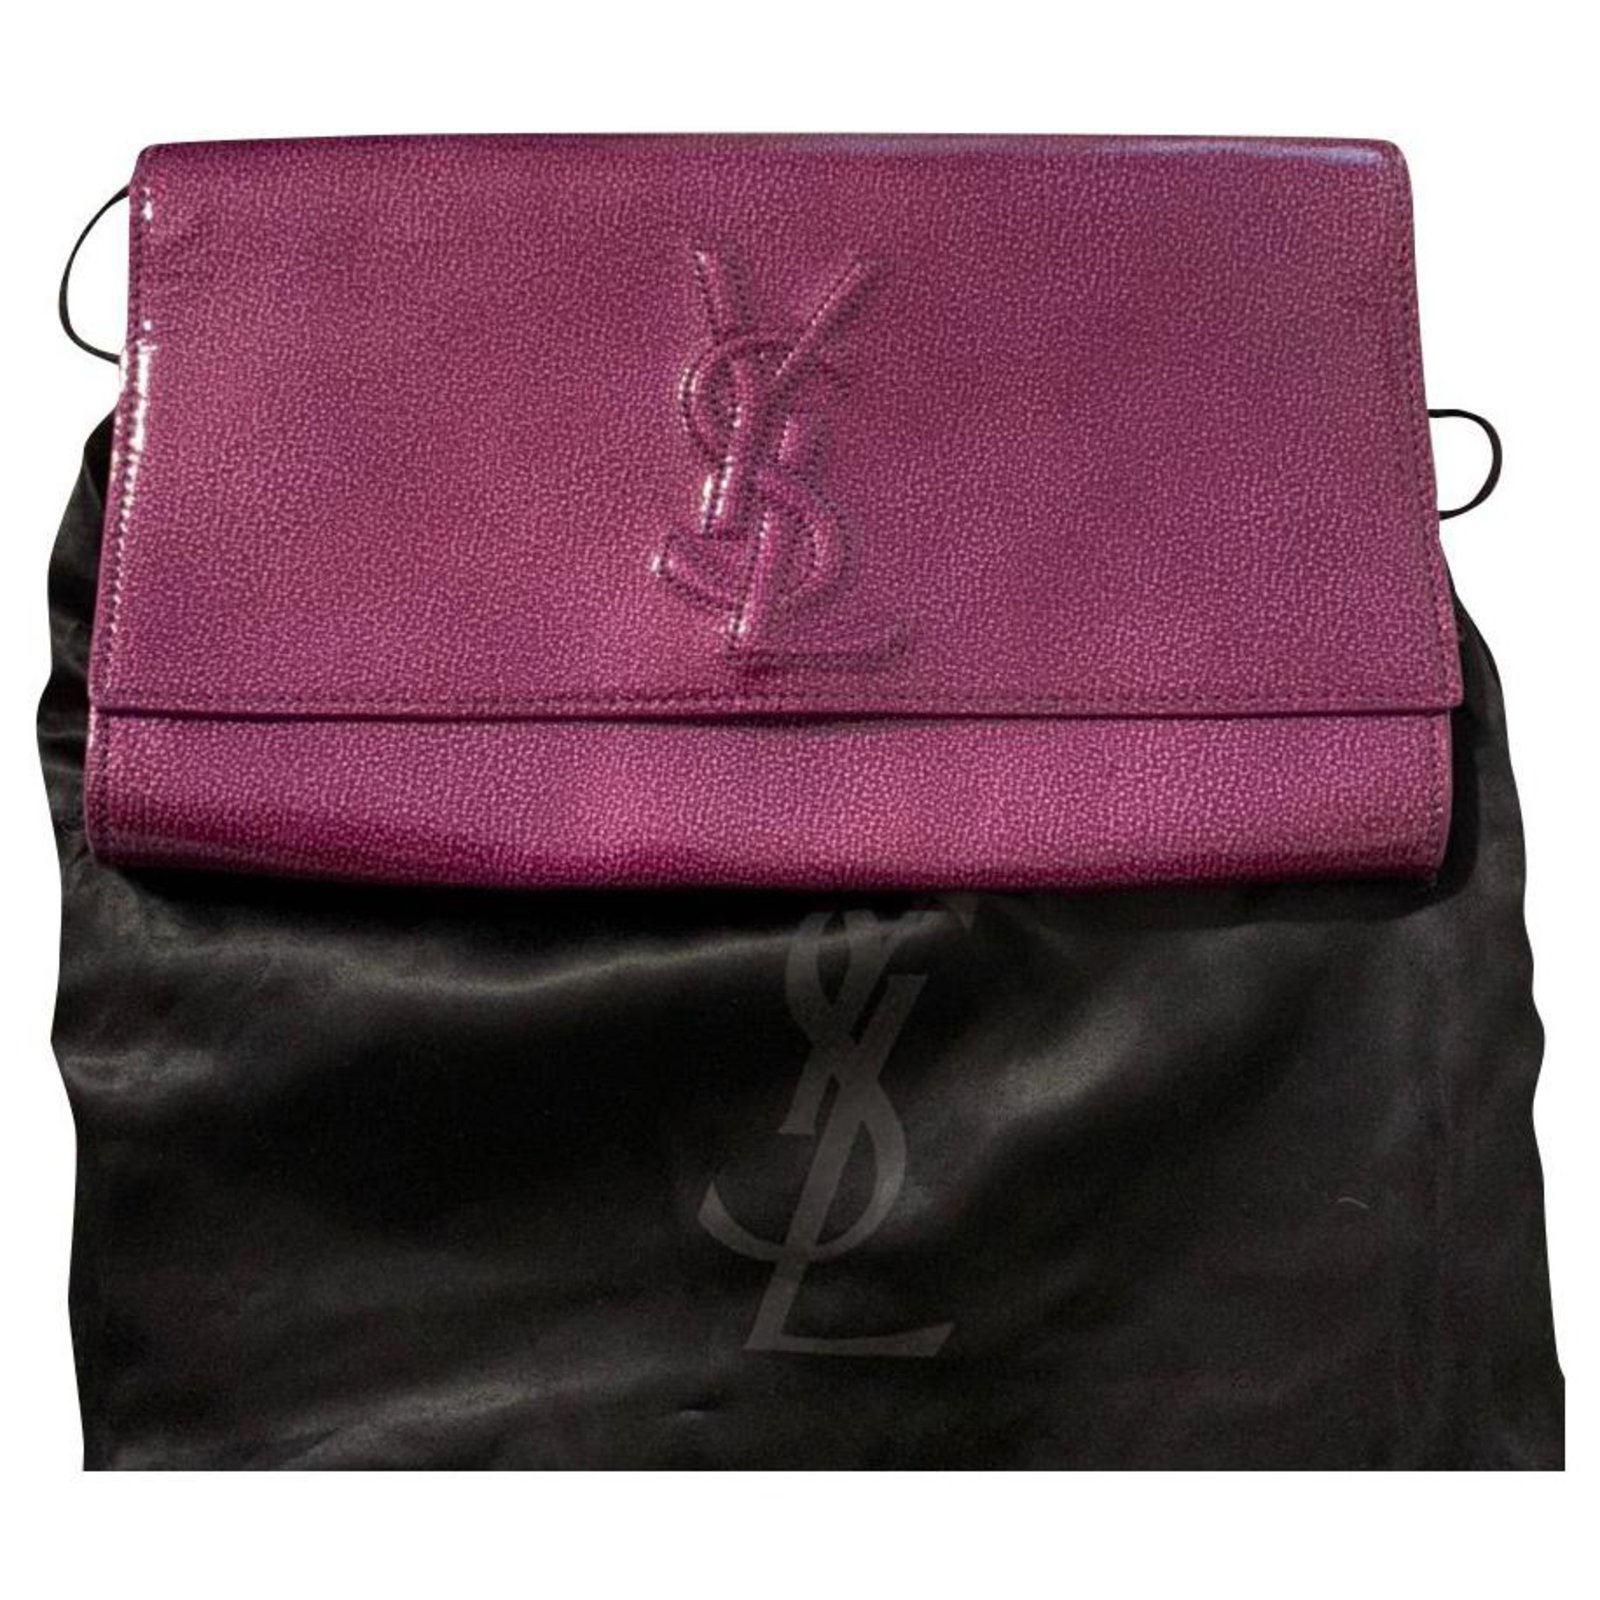 Belle de jour leather clutch bag Yves Saint Laurent Pink in